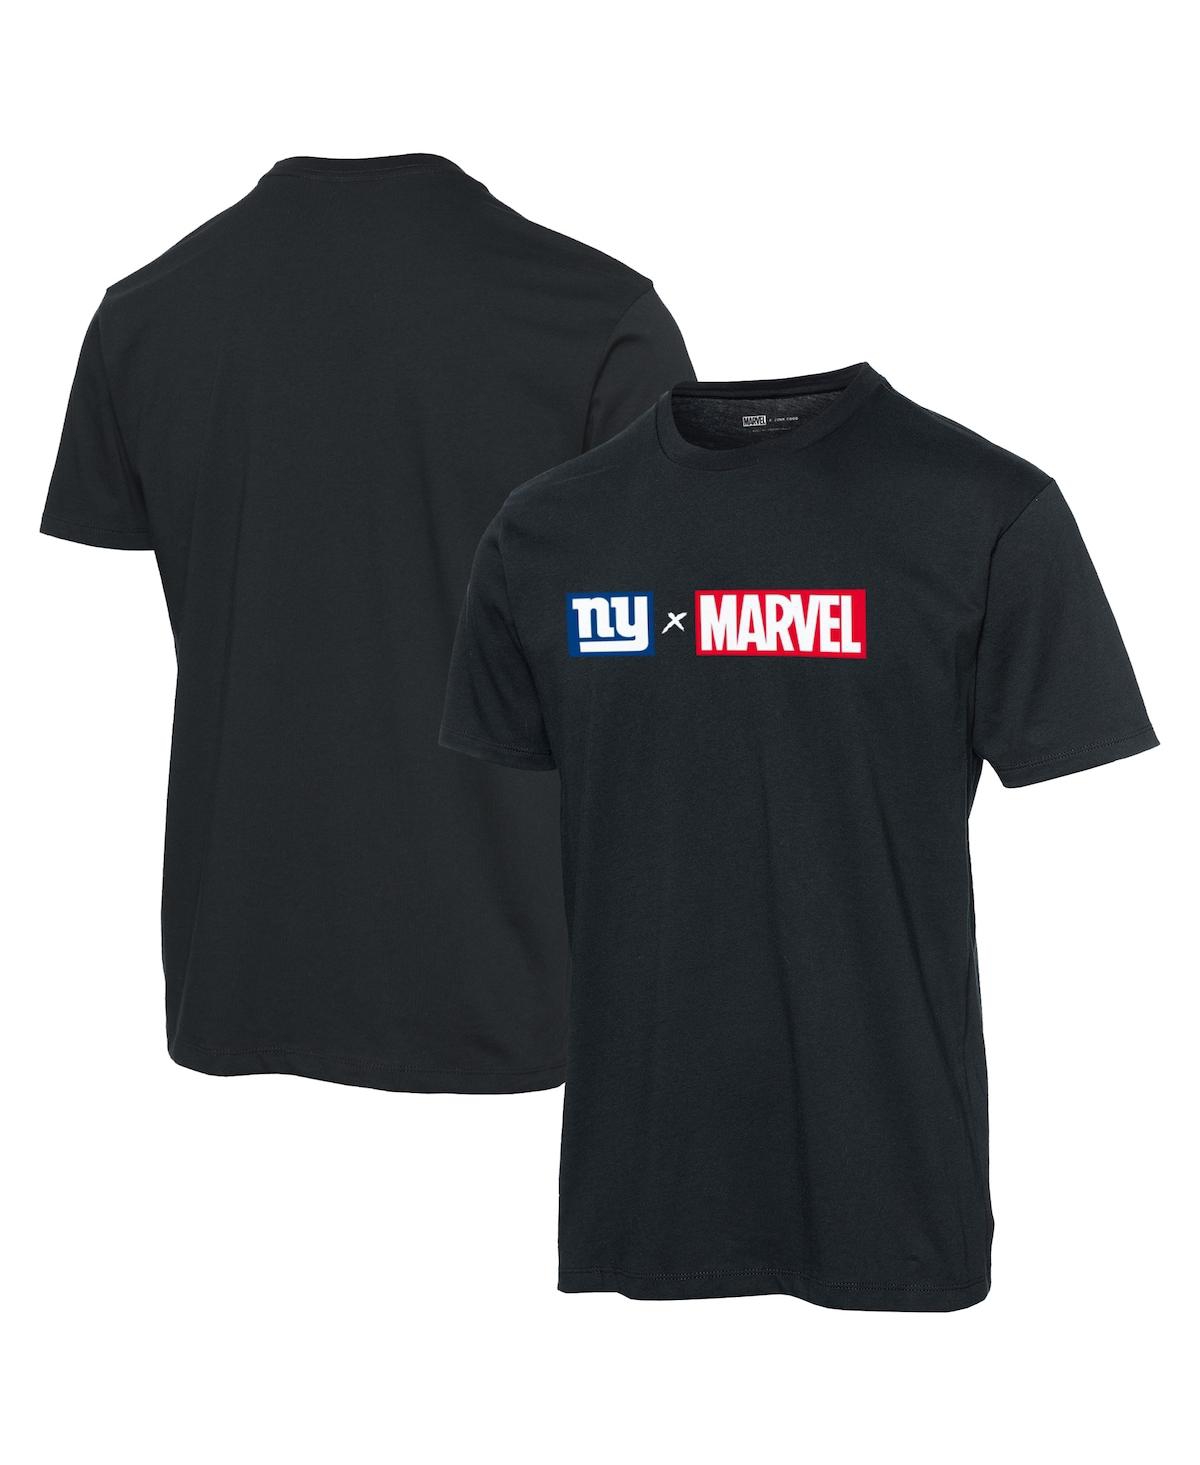 Men's Junk Food Black New York Giants Marvel Logo T-shirt - Black